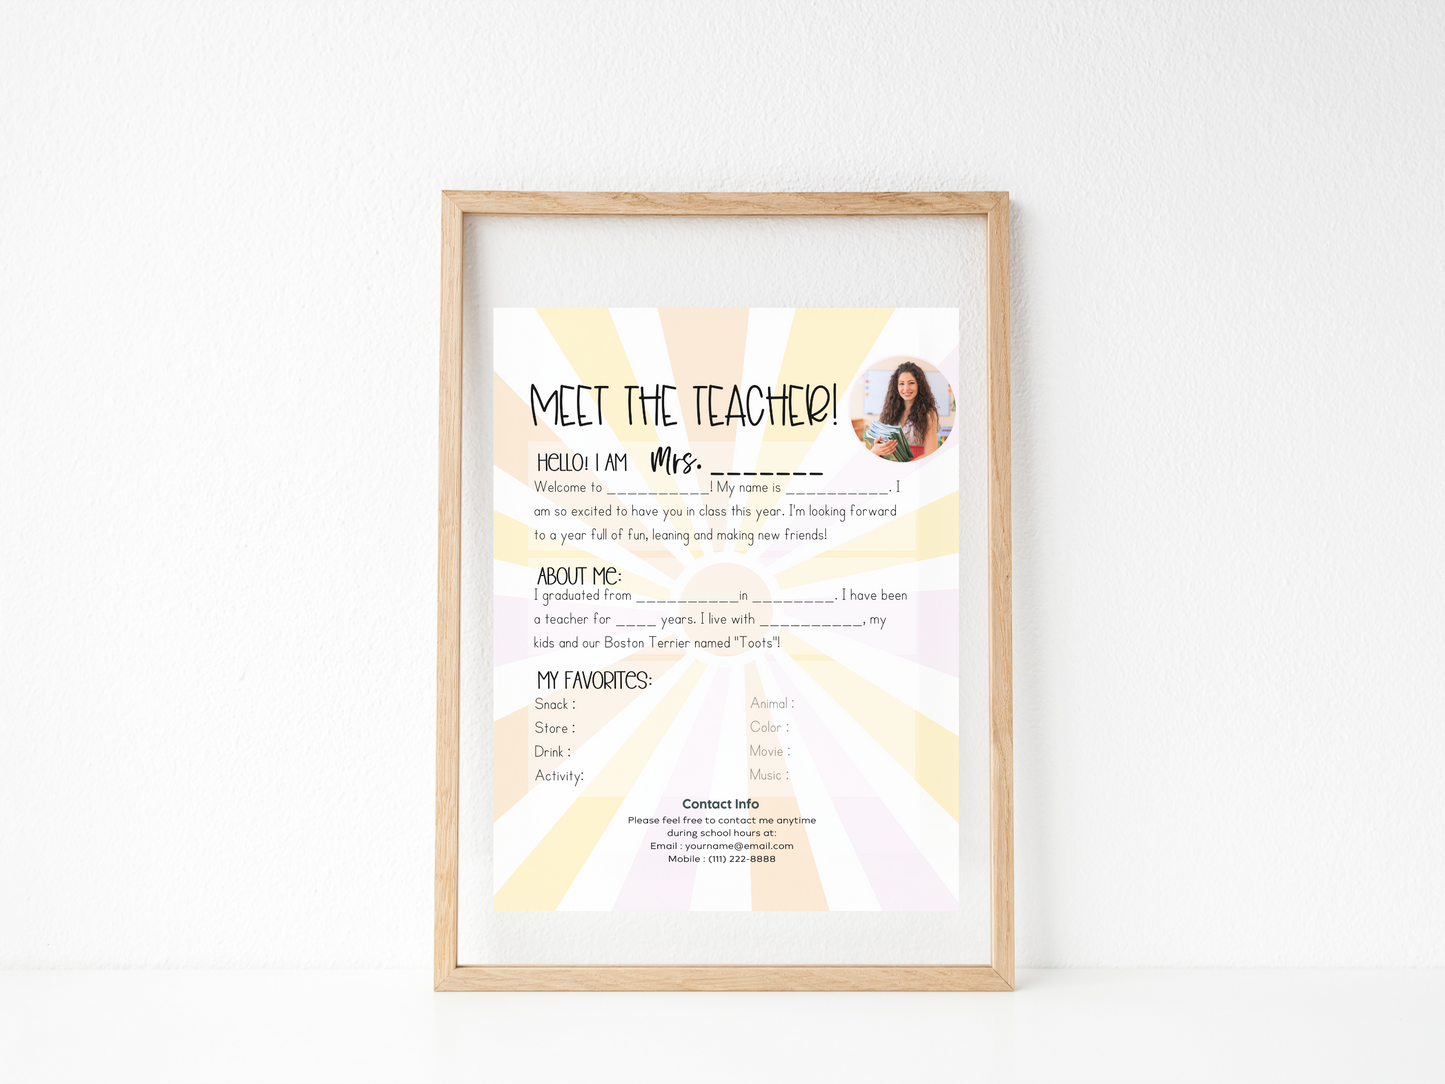 Meet the Teacher Letter Template - Sunny